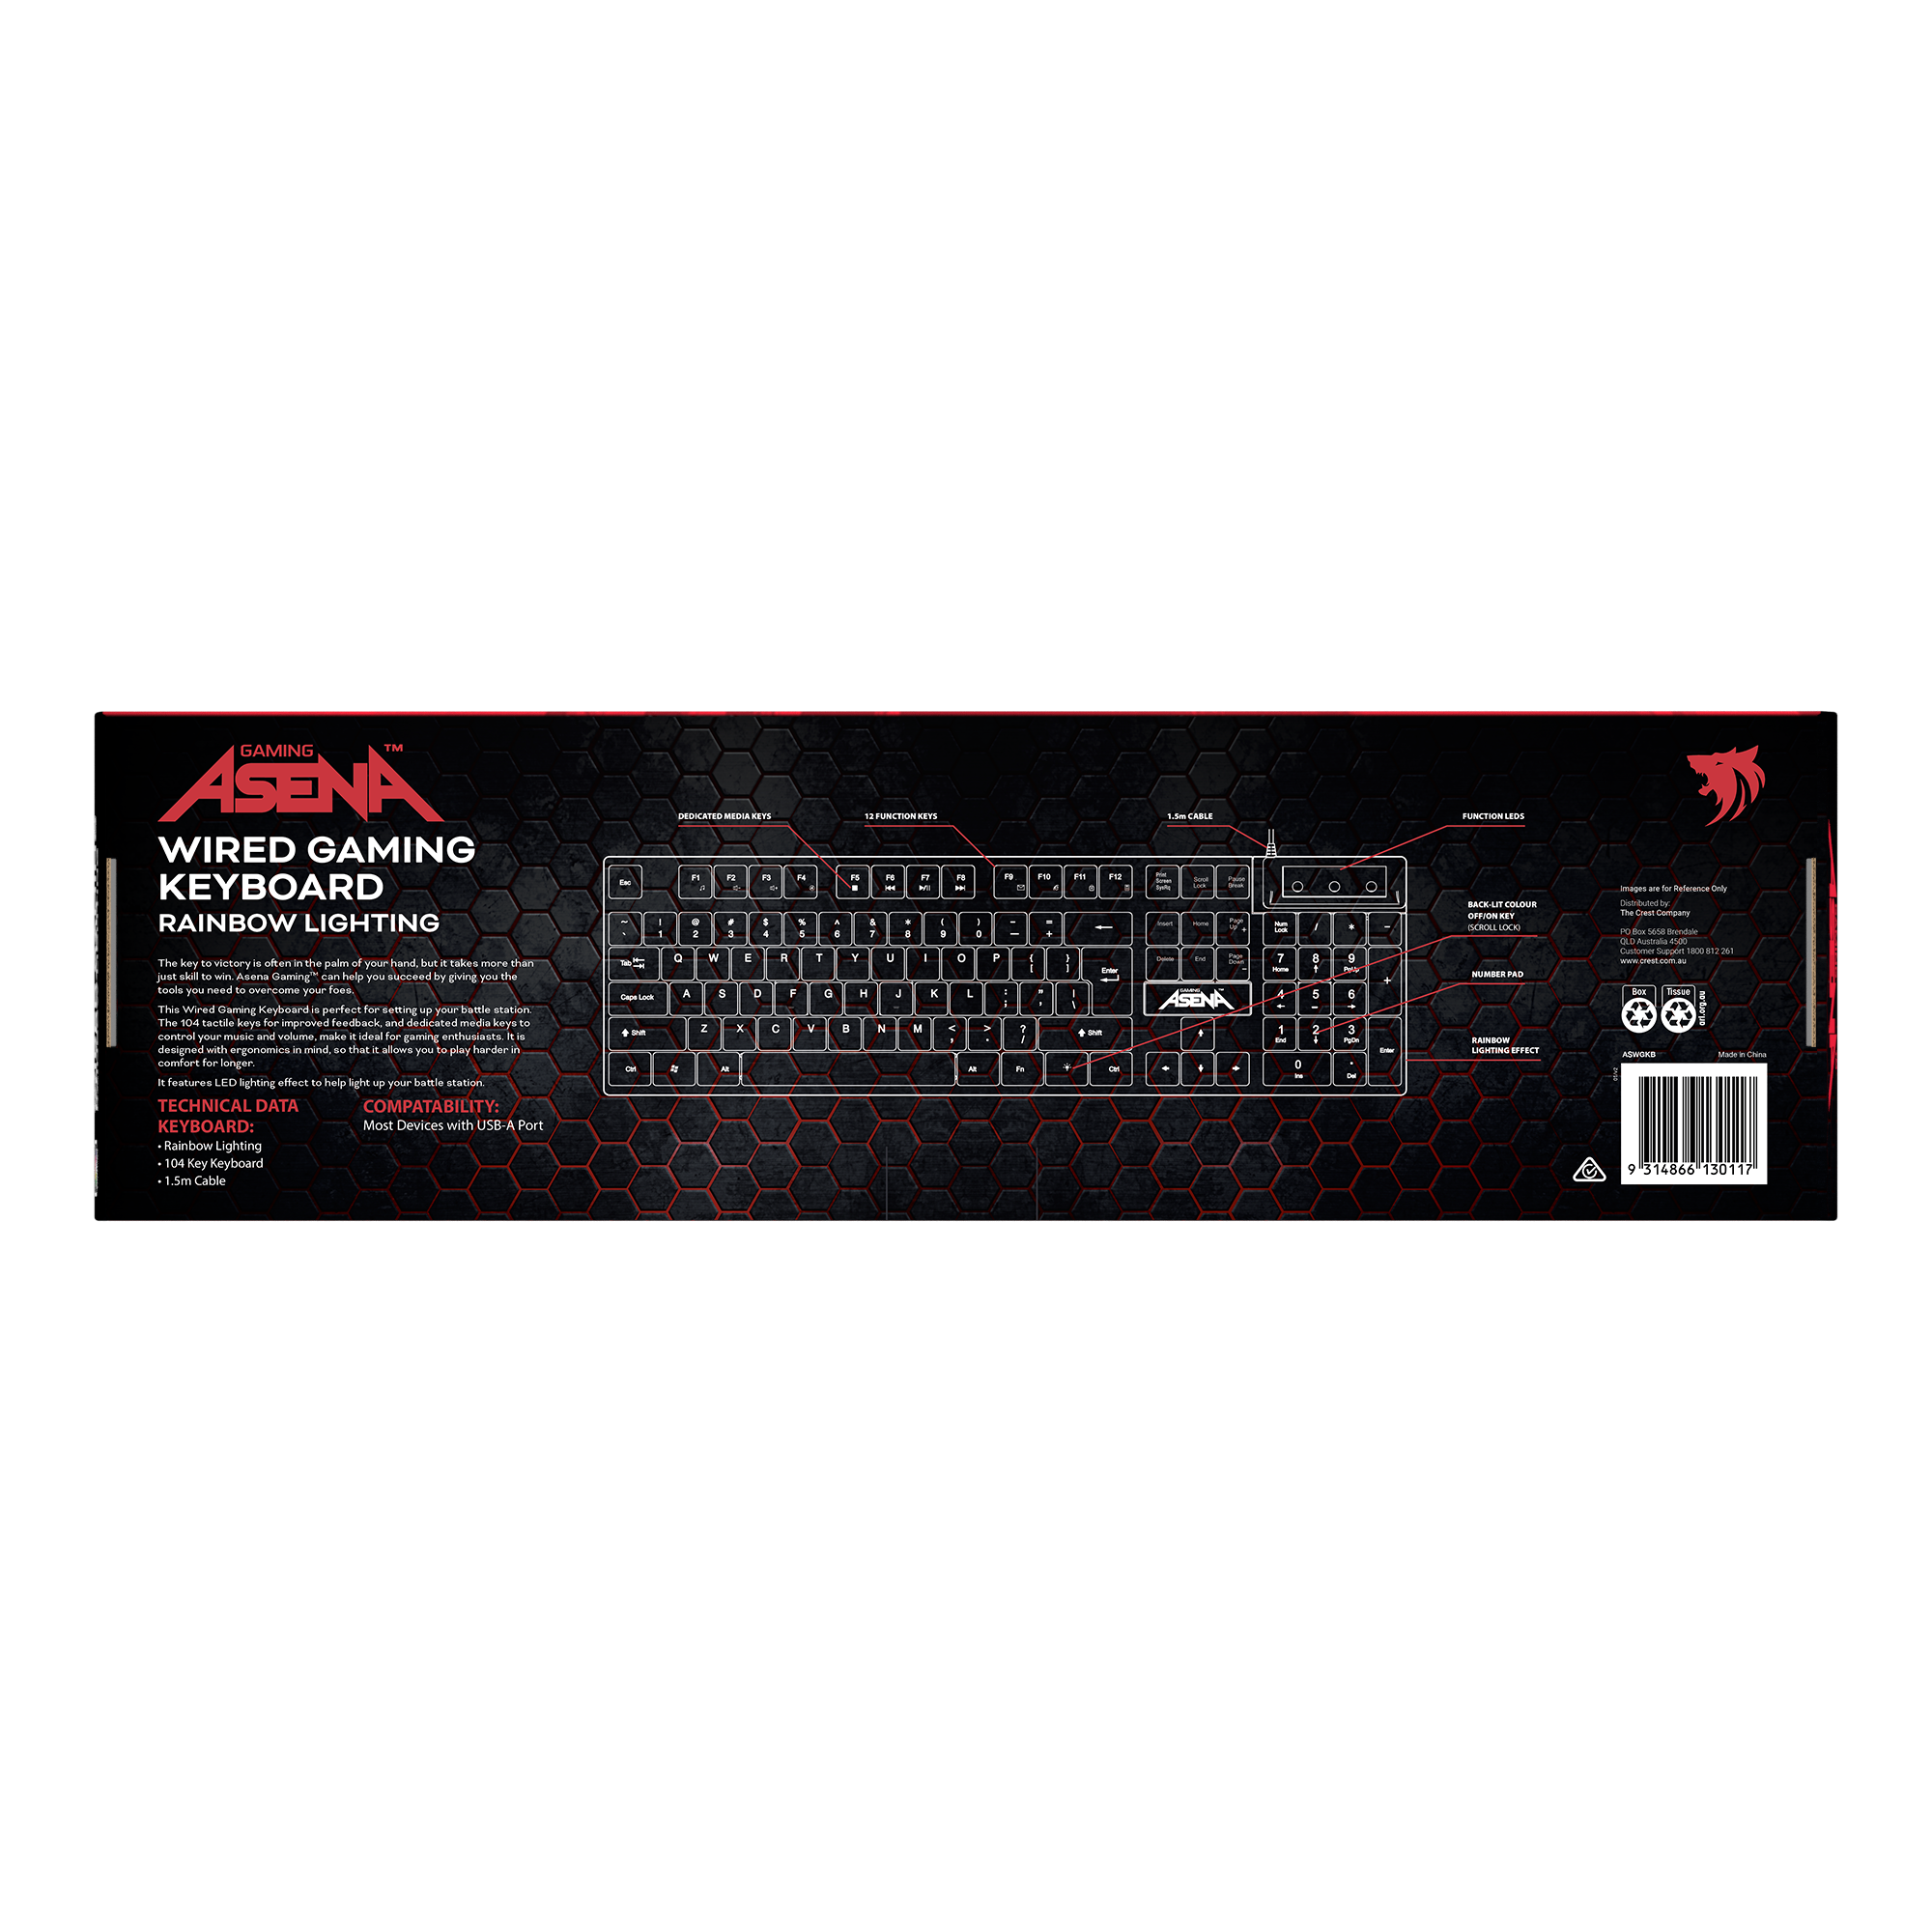 Asena Gaming Wired Keyboard